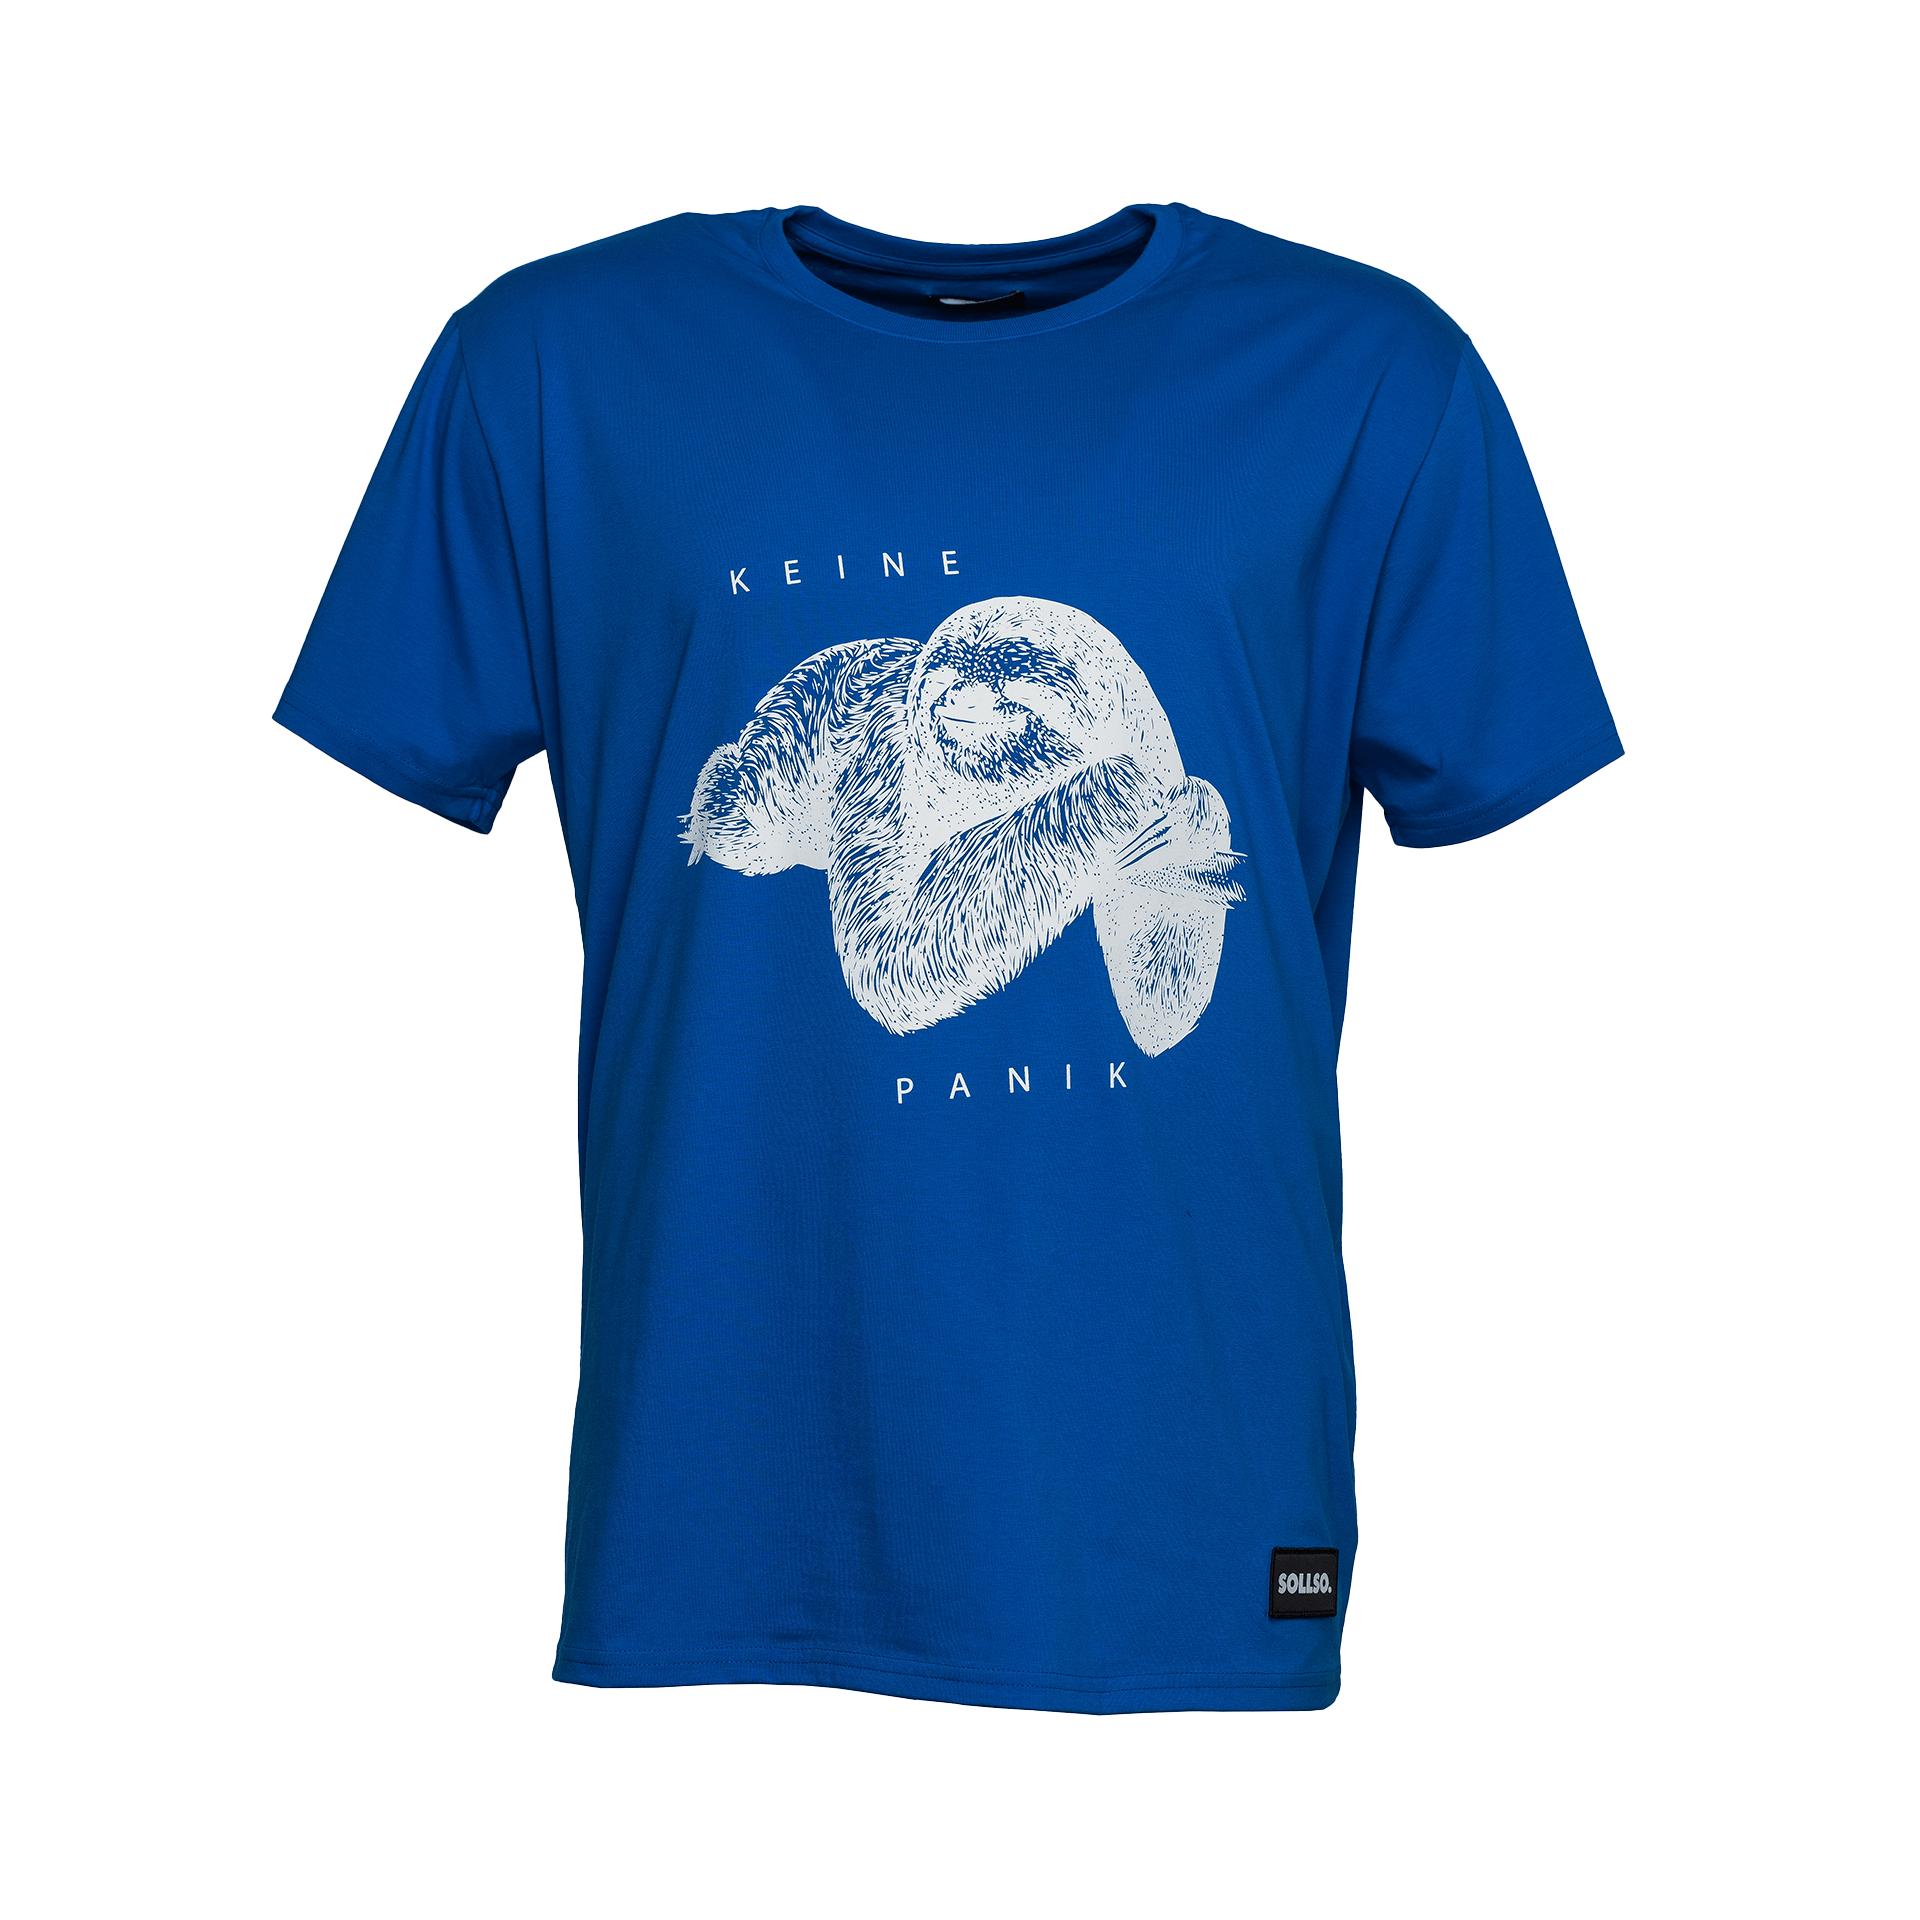 SOLLSO. T-Shirt "Keine Panik Faultier", Farbe Ocean Blue, Größe M